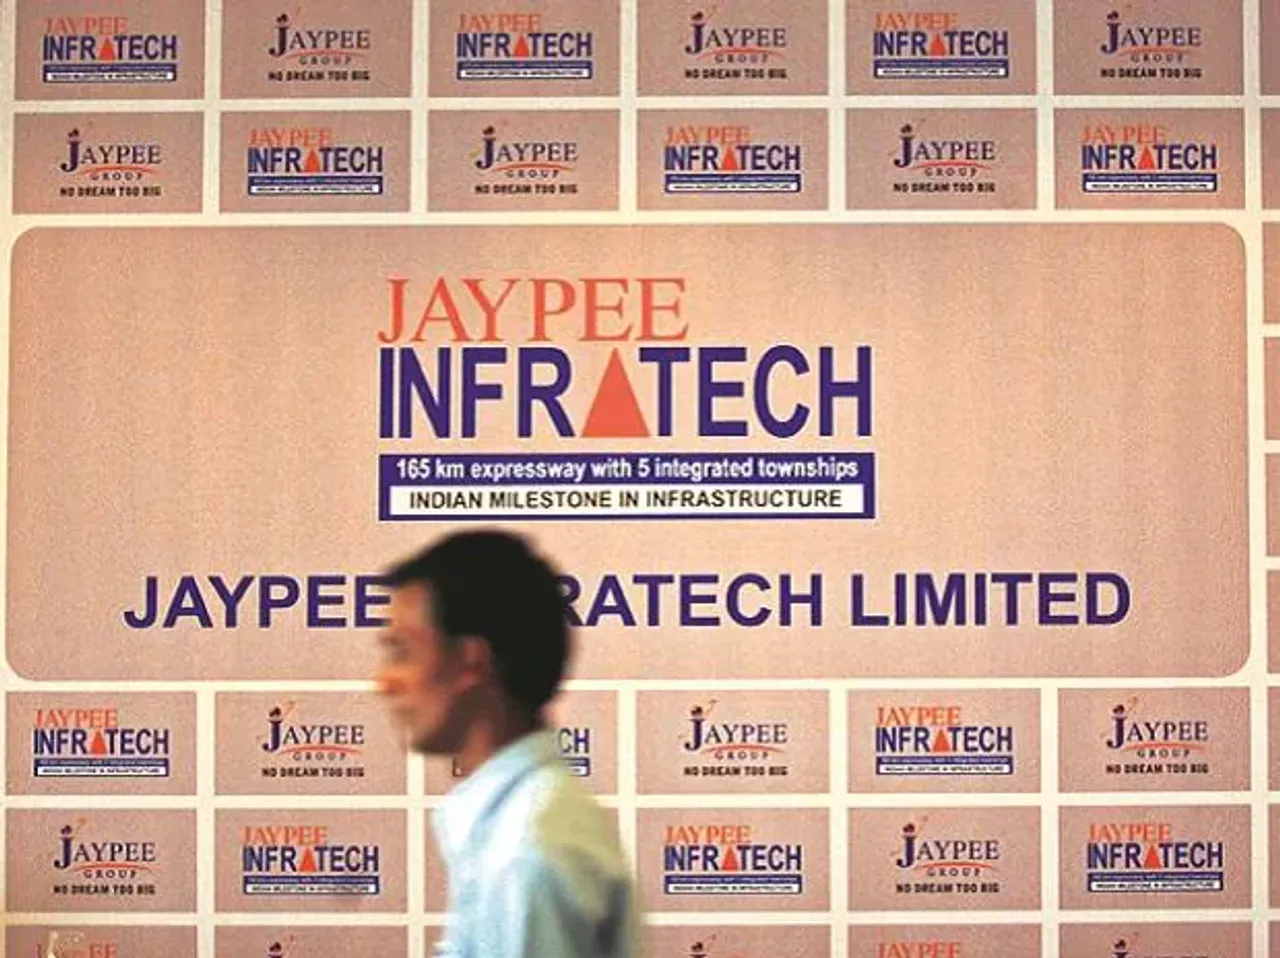 NCLT approves Suraksha group's bid for Jaypee Infratech